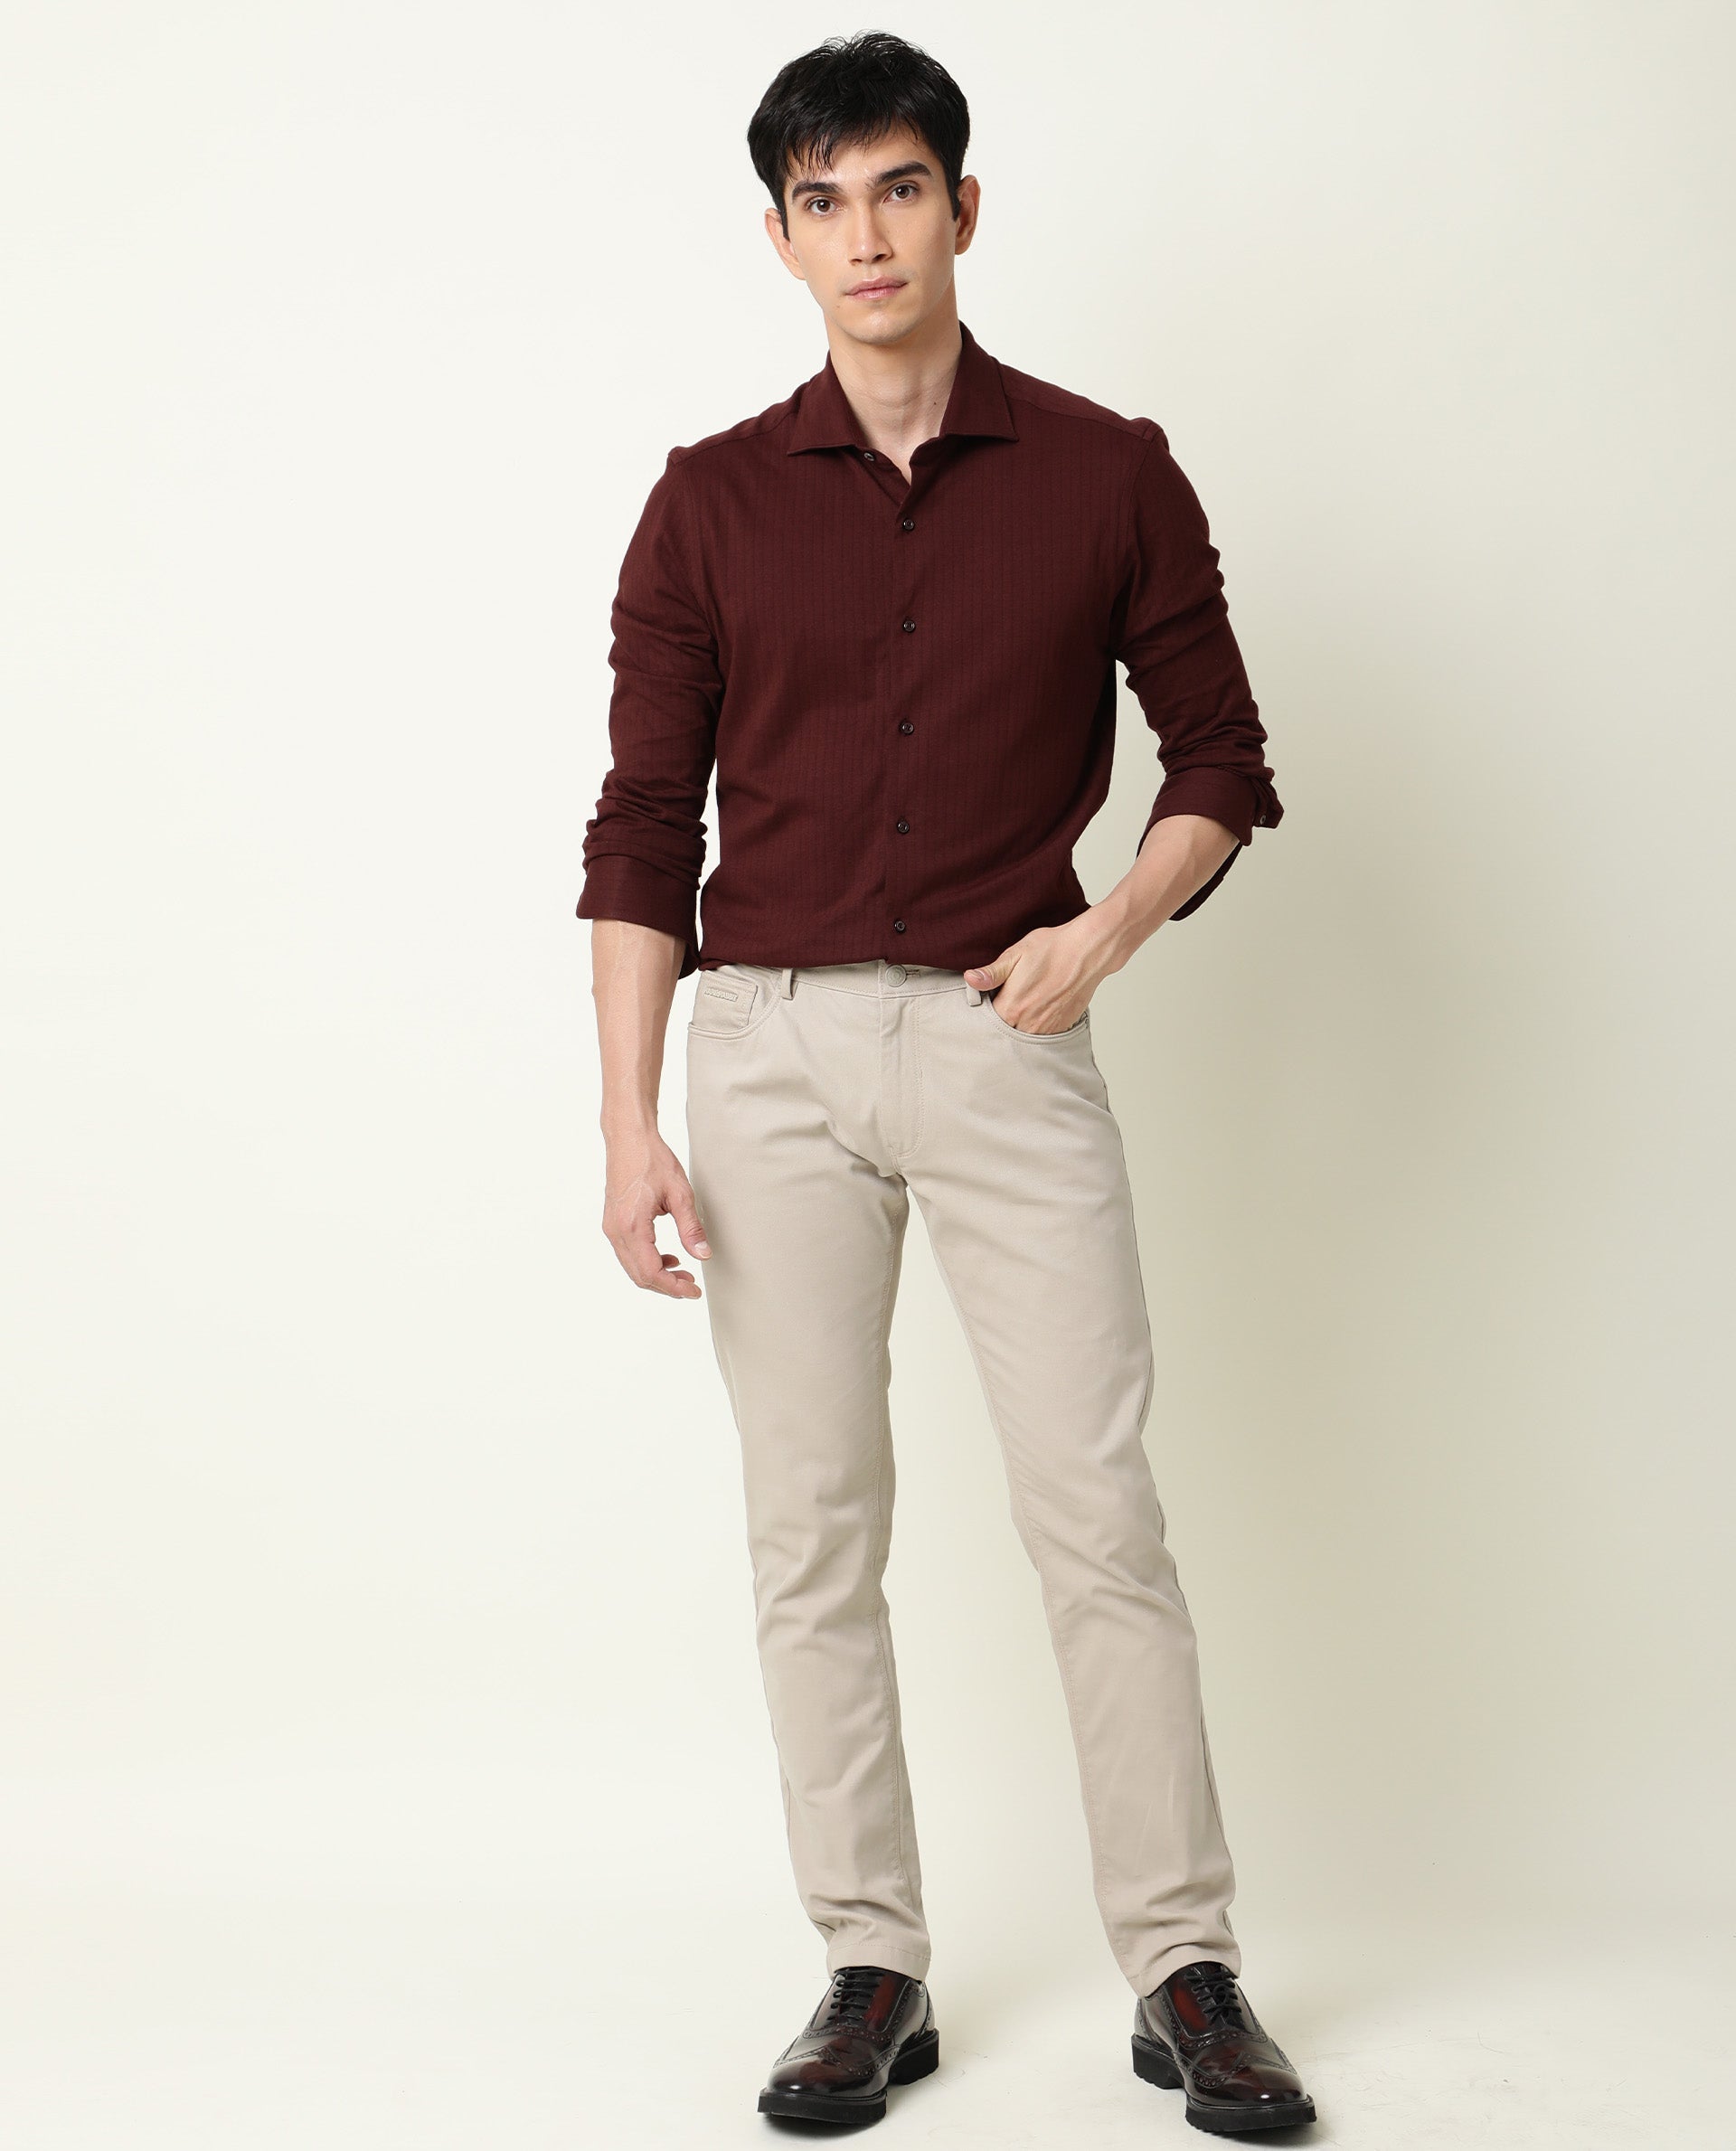 Maroon Blazer Matching Shirt and Pant Ideas | Maroon Blazer Combination Men  - TiptopGents